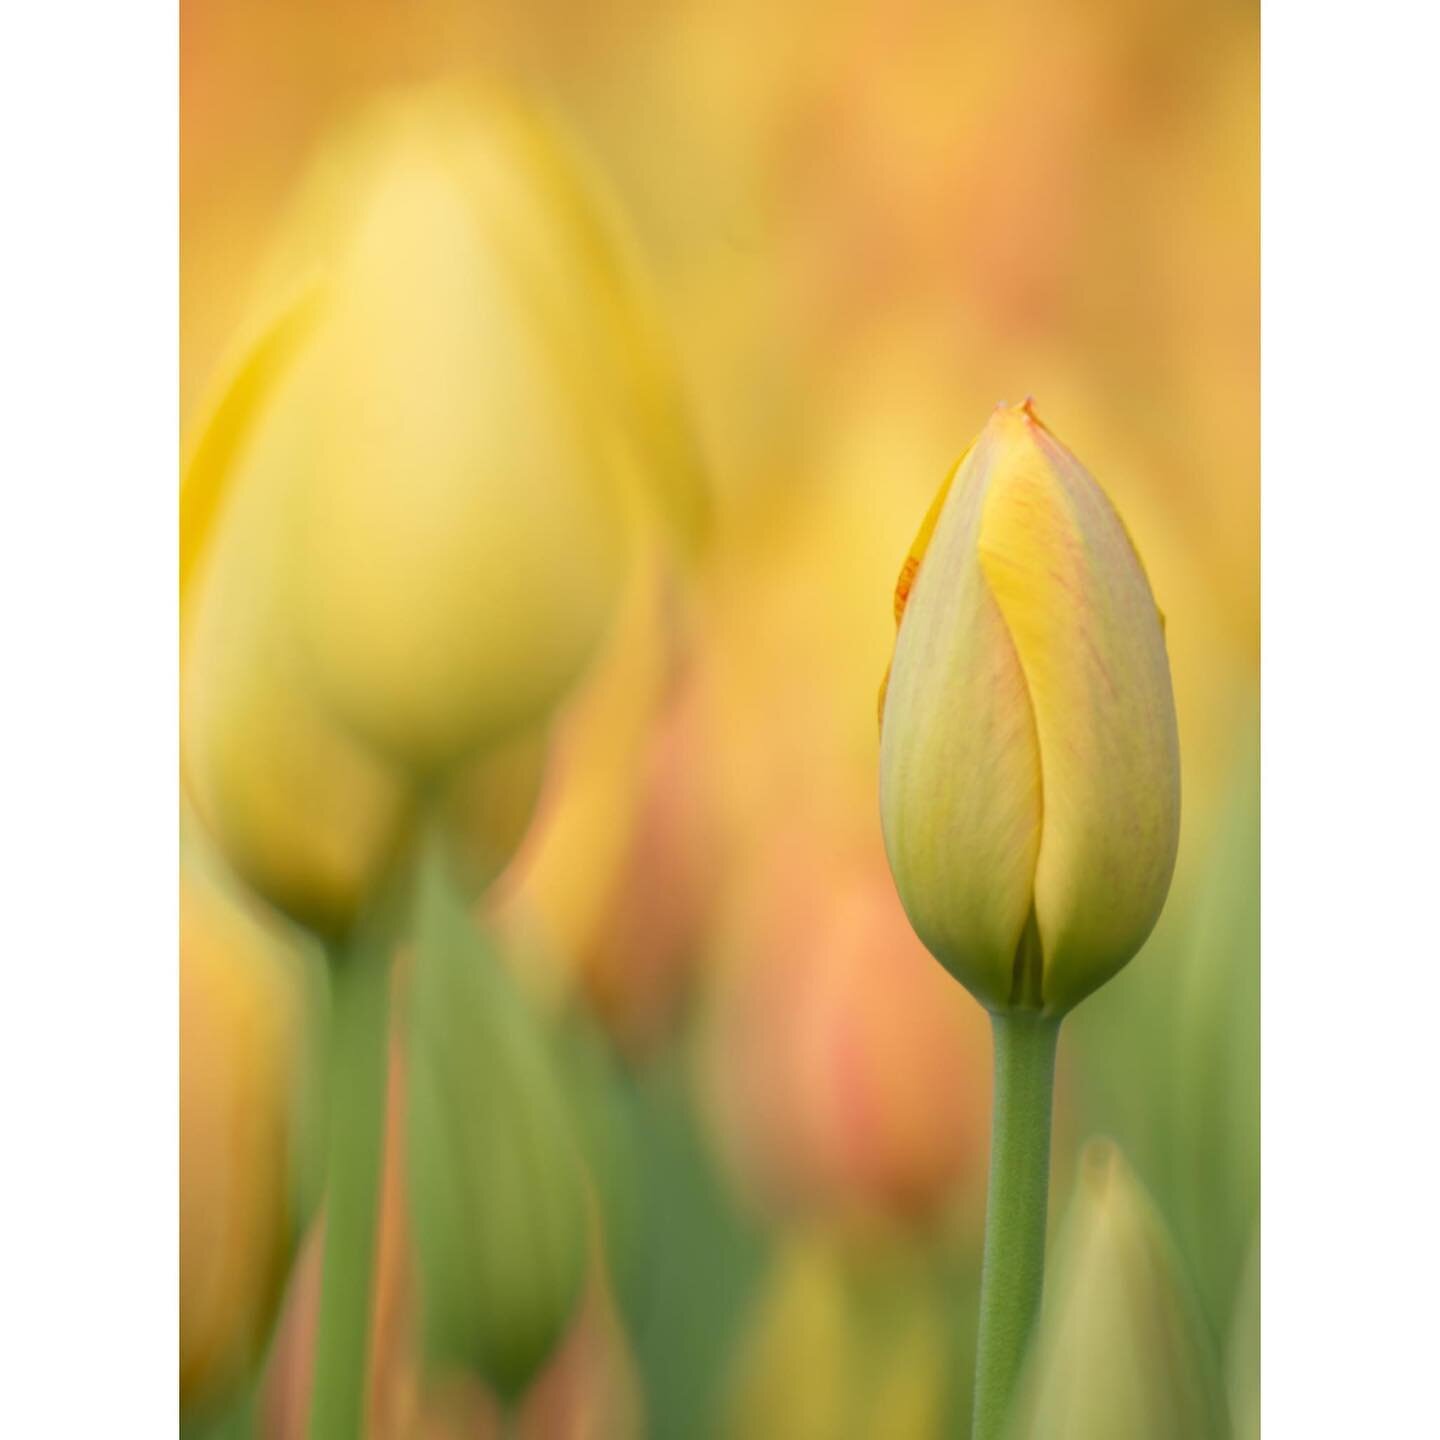 Flowers! Jardins botaniques.
Sigma 600mm reflex lens does wild things. #tulips #magnolia #montrealphotographer #sigma600mmf8mirrorlens #lesjardinsbotaniquesdemontr&eacute;al #flowerporn #macro